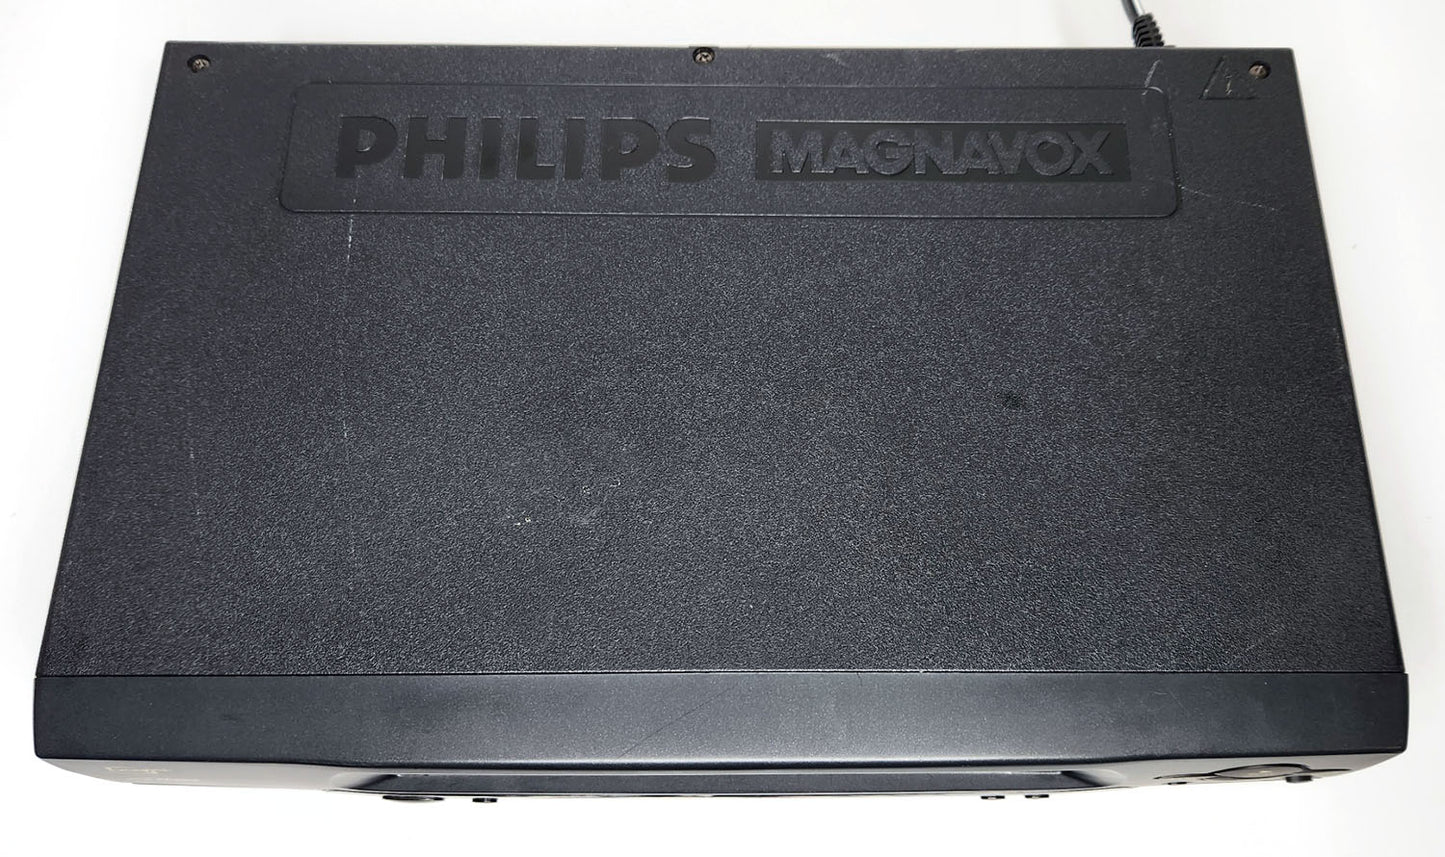 Philips Magnavox VRA431AT VCR, 4-Head Mono - Top